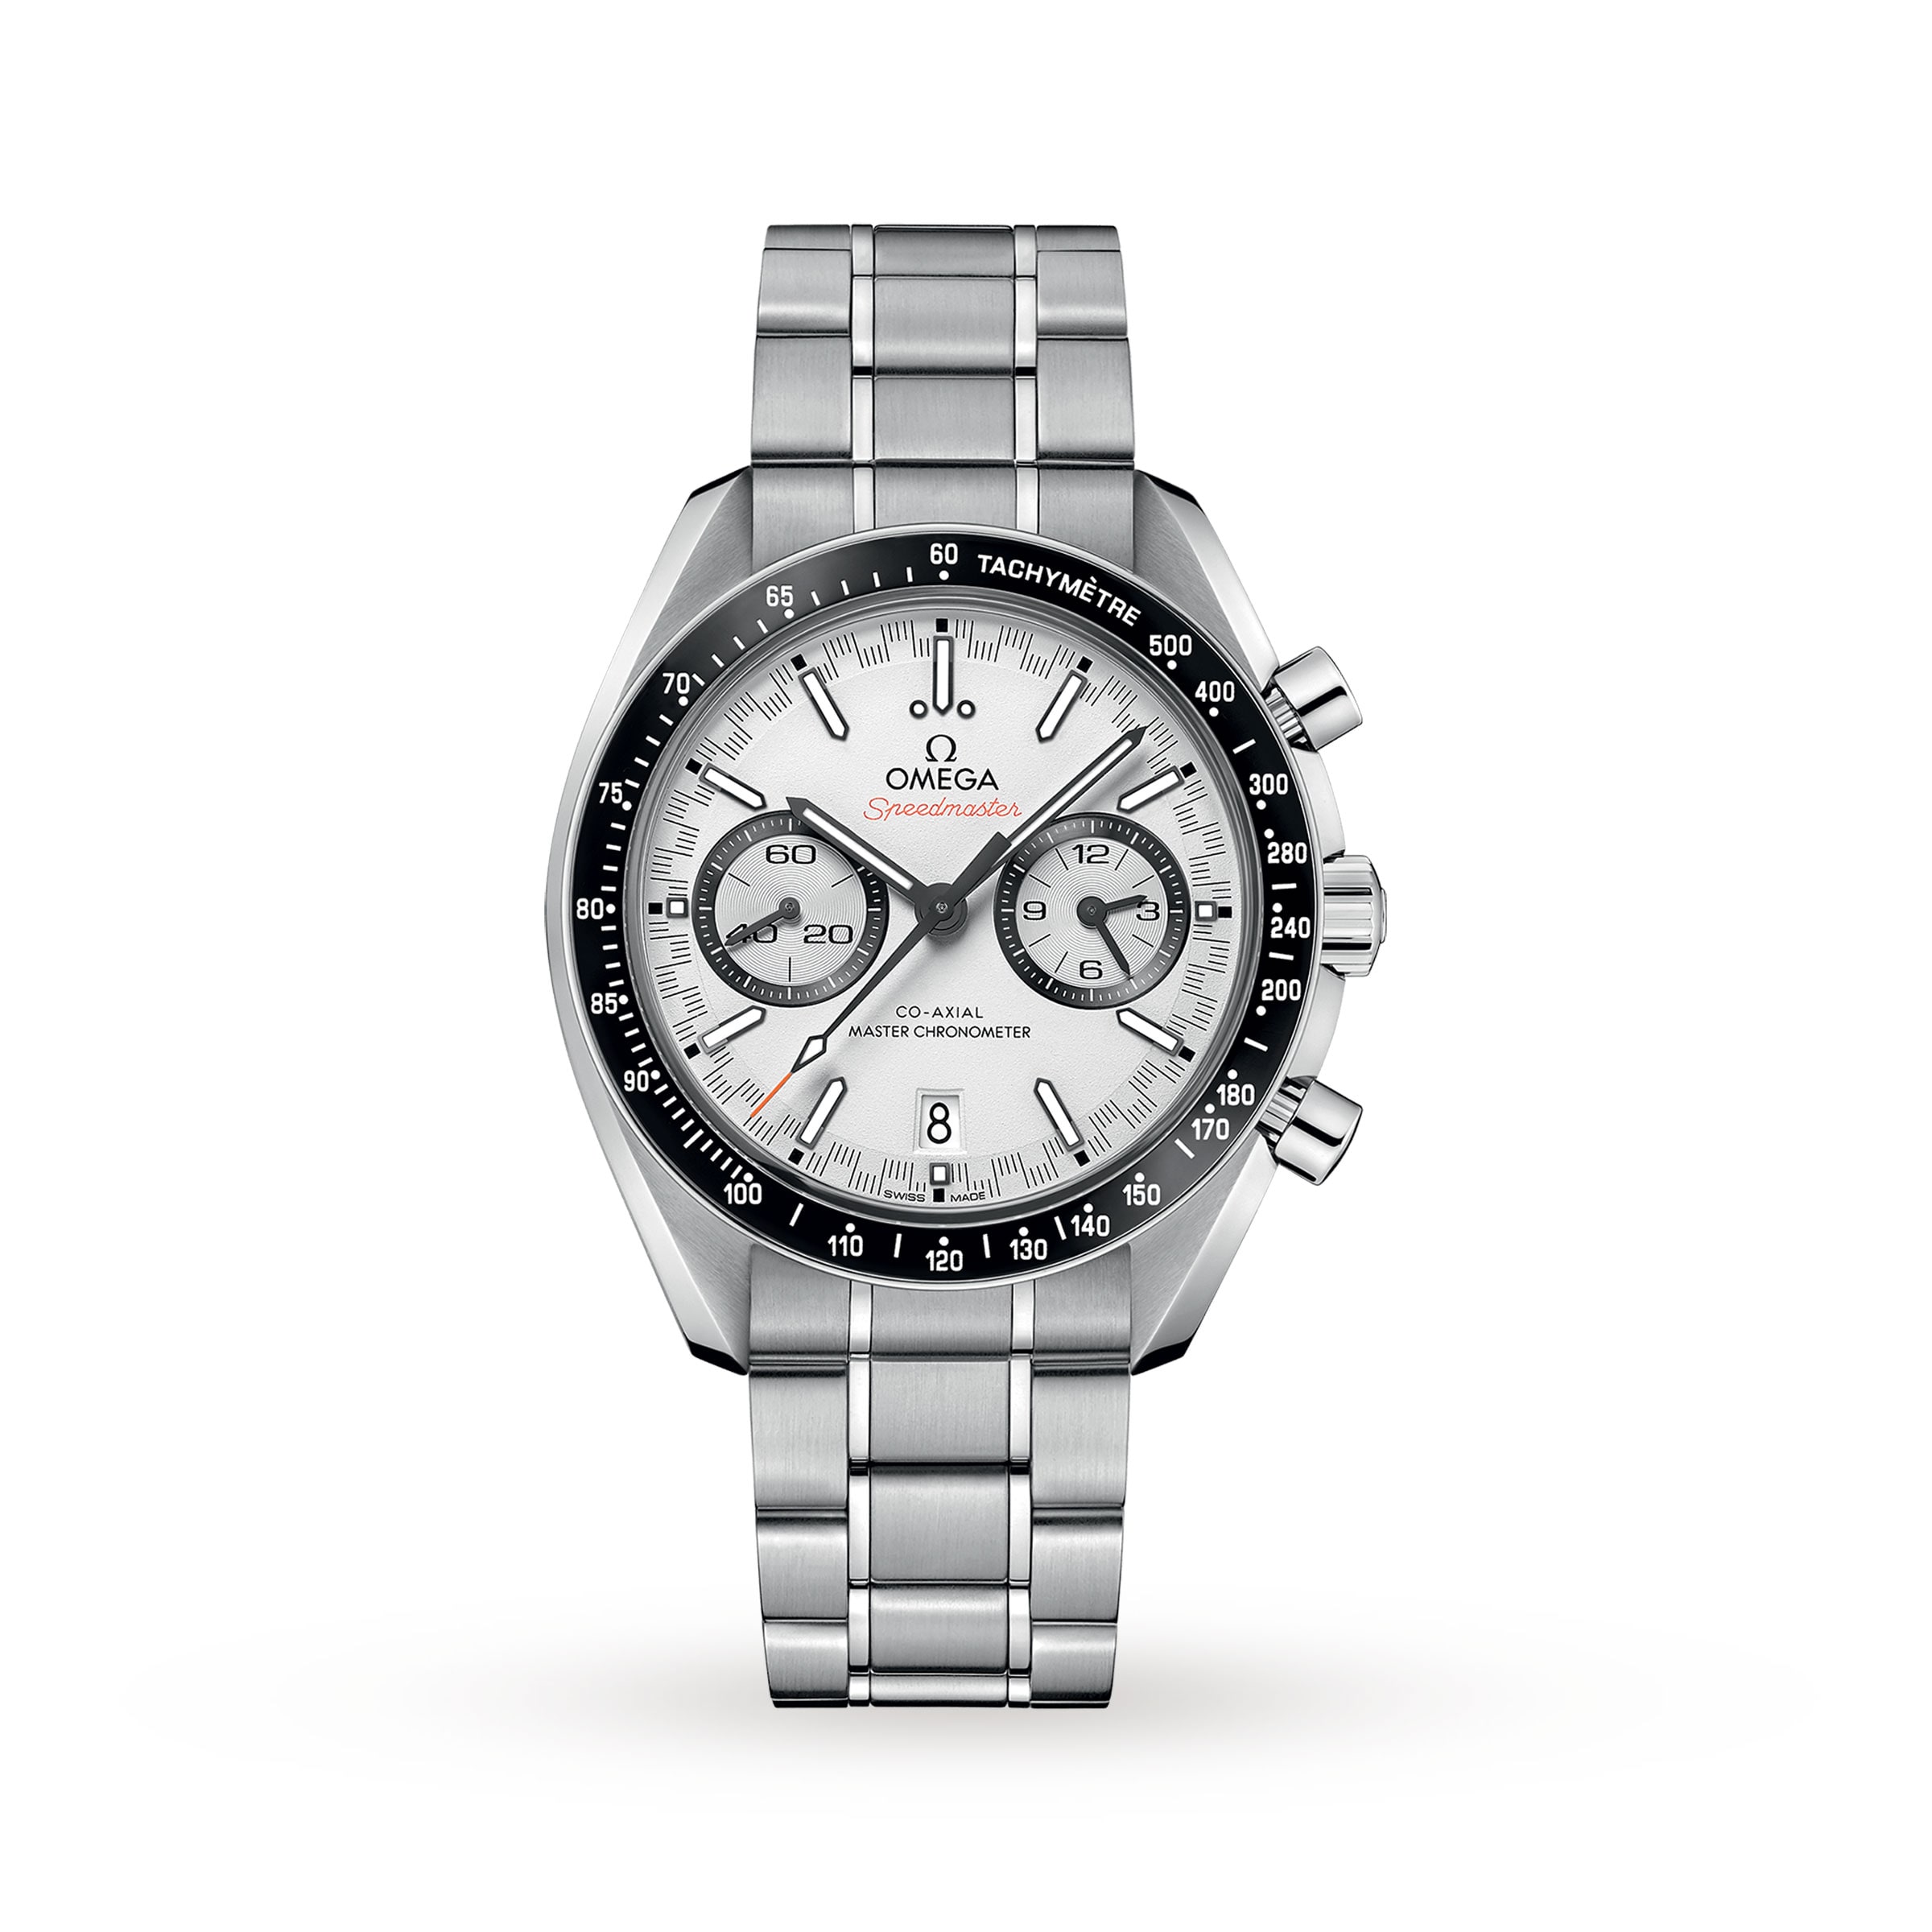 Speedmaster as first luxury Watch : r/OmegaWatches